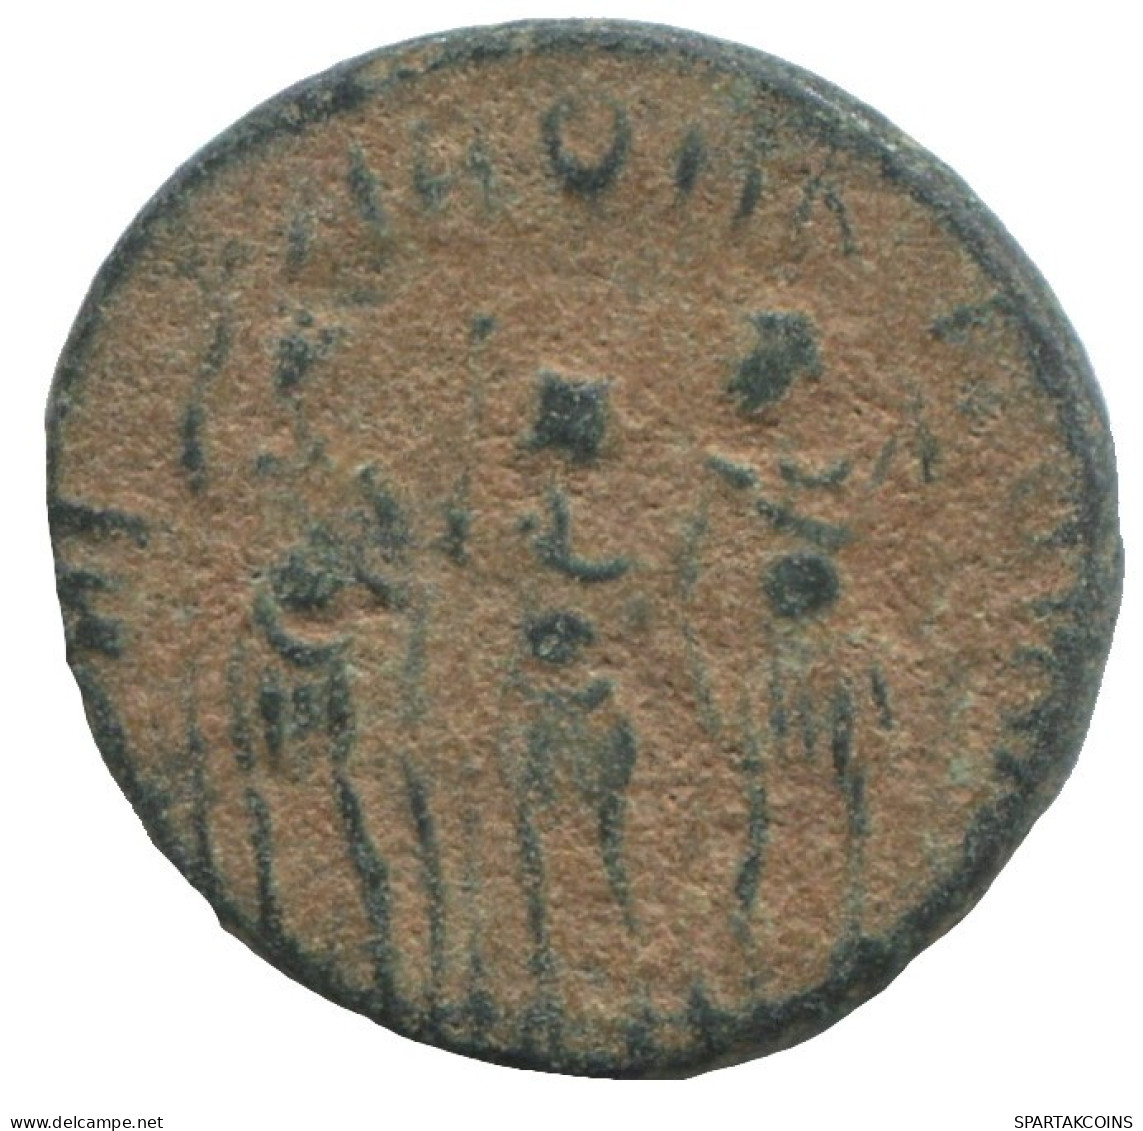 HONORIUS CYZICUS SMKA AD393-423 GLORIA ROMANORVM 1.3g/15mm #ANN1288.9.D.A - The End Of Empire (363 AD Tot 476 AD)